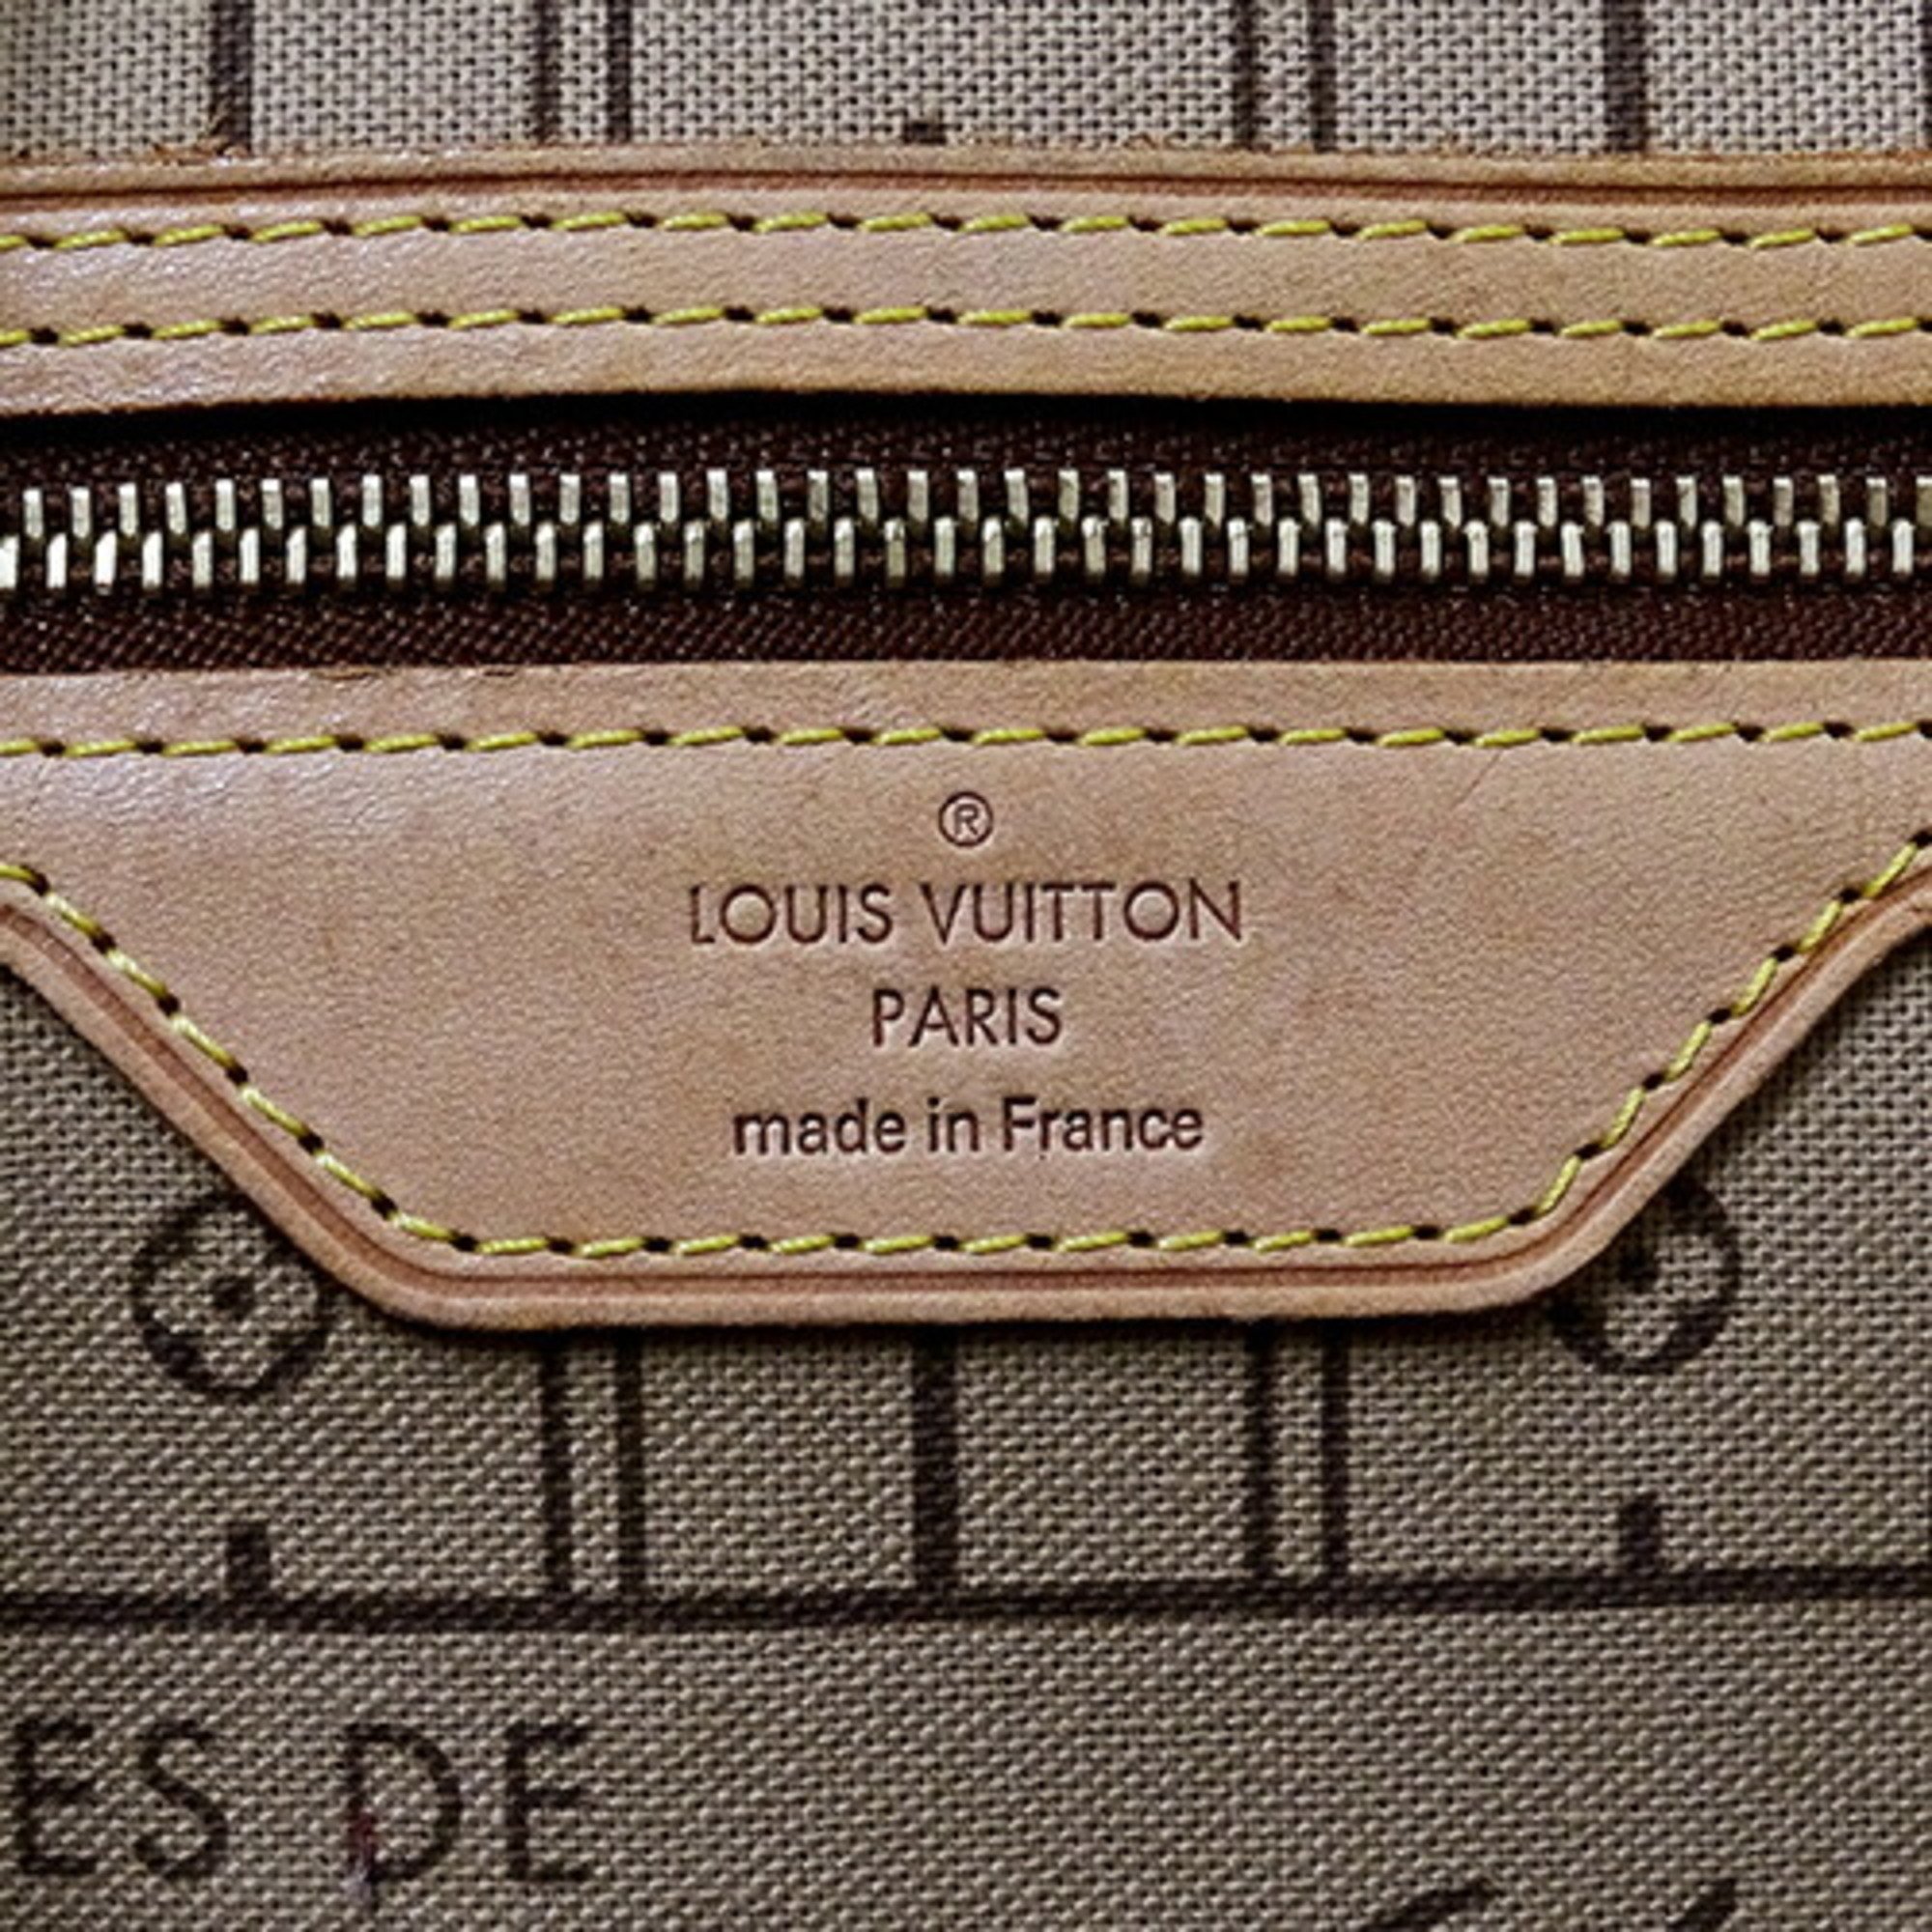 Louis Vuitton LOUIS VUITTON Bag Monogram Women's Tote Neverfull PM M40155 Brown